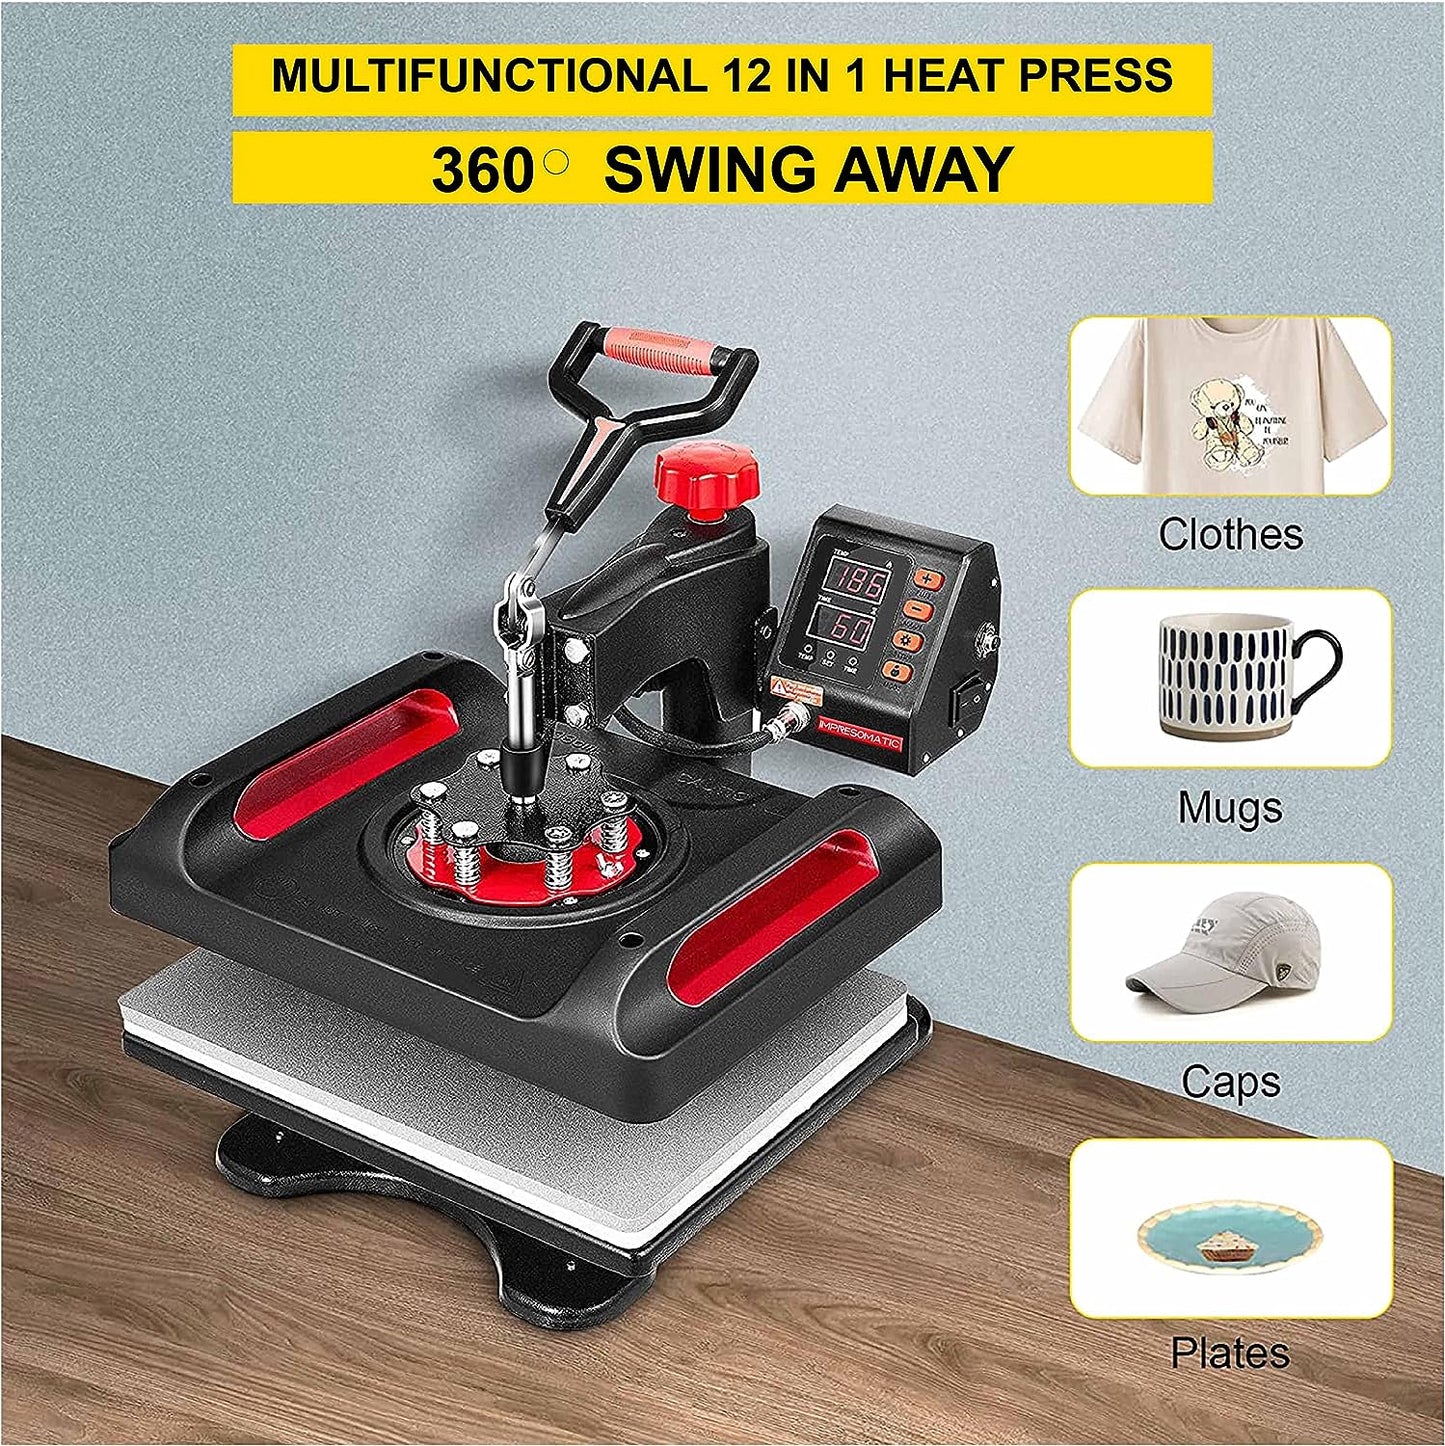 Impresomatic 12 in 1 Heat Press Machine